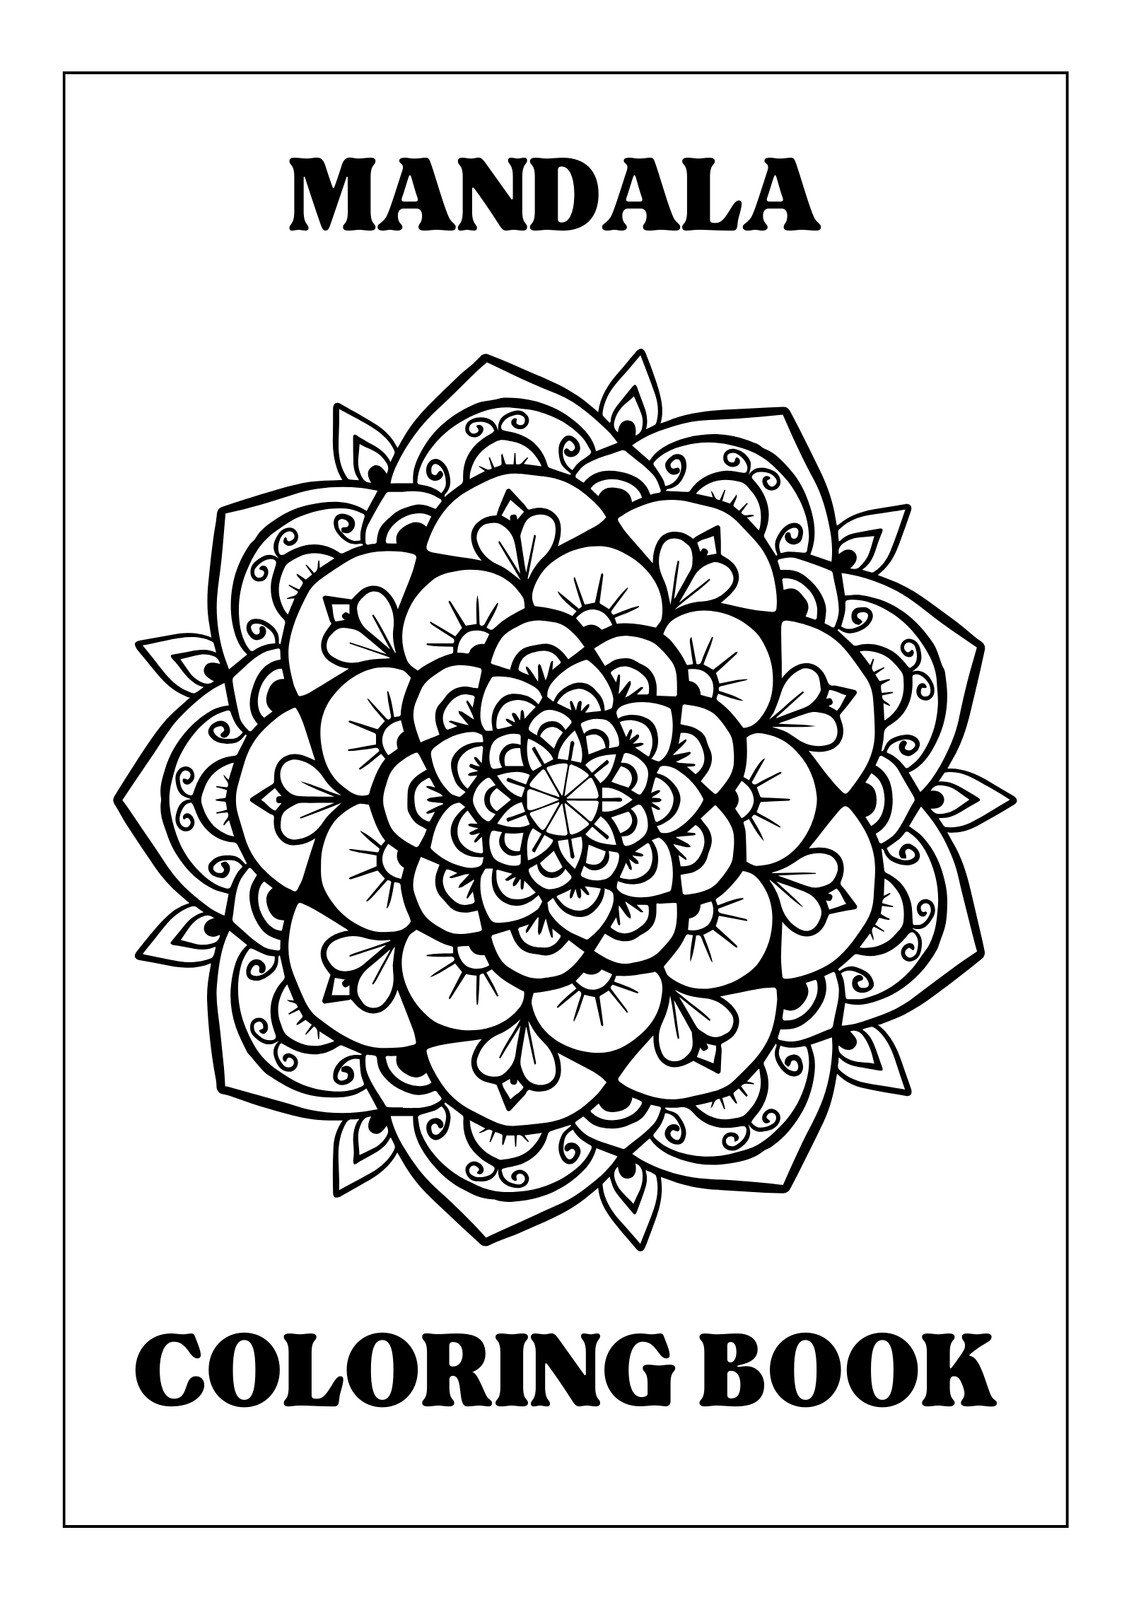 https://marketplace.canva.com/EAFtTdr_Z3w/1/0/1131w/canva-black-and-white-linear-mandala-coloring-book-worksheet-4tgeUl488tI.jpg